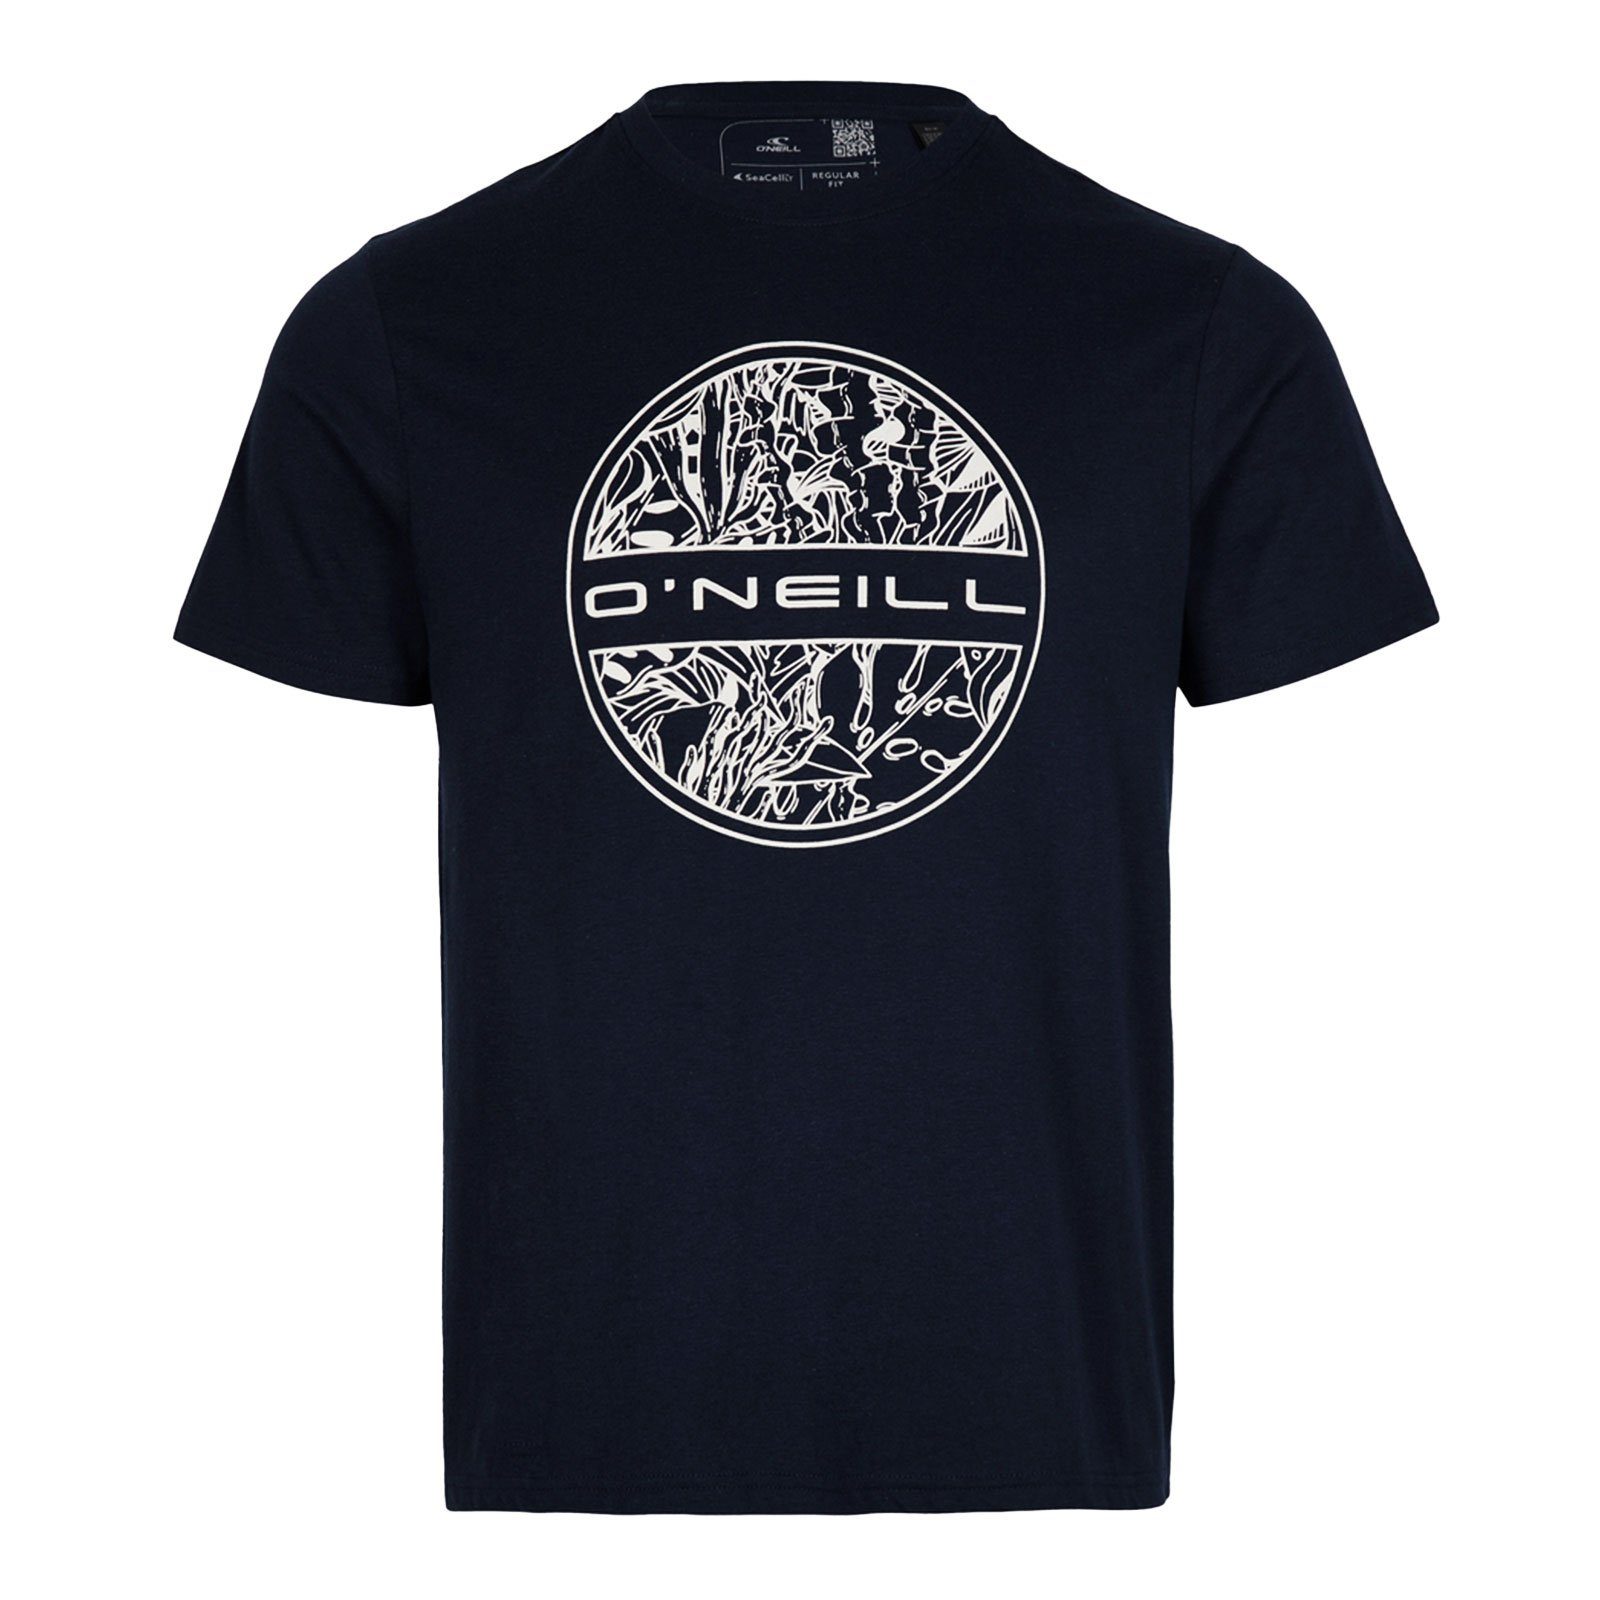 O'Neill T-Shirt Seareef mit kreisförmigem Meeresflora-Print und Logo 15039 outer space